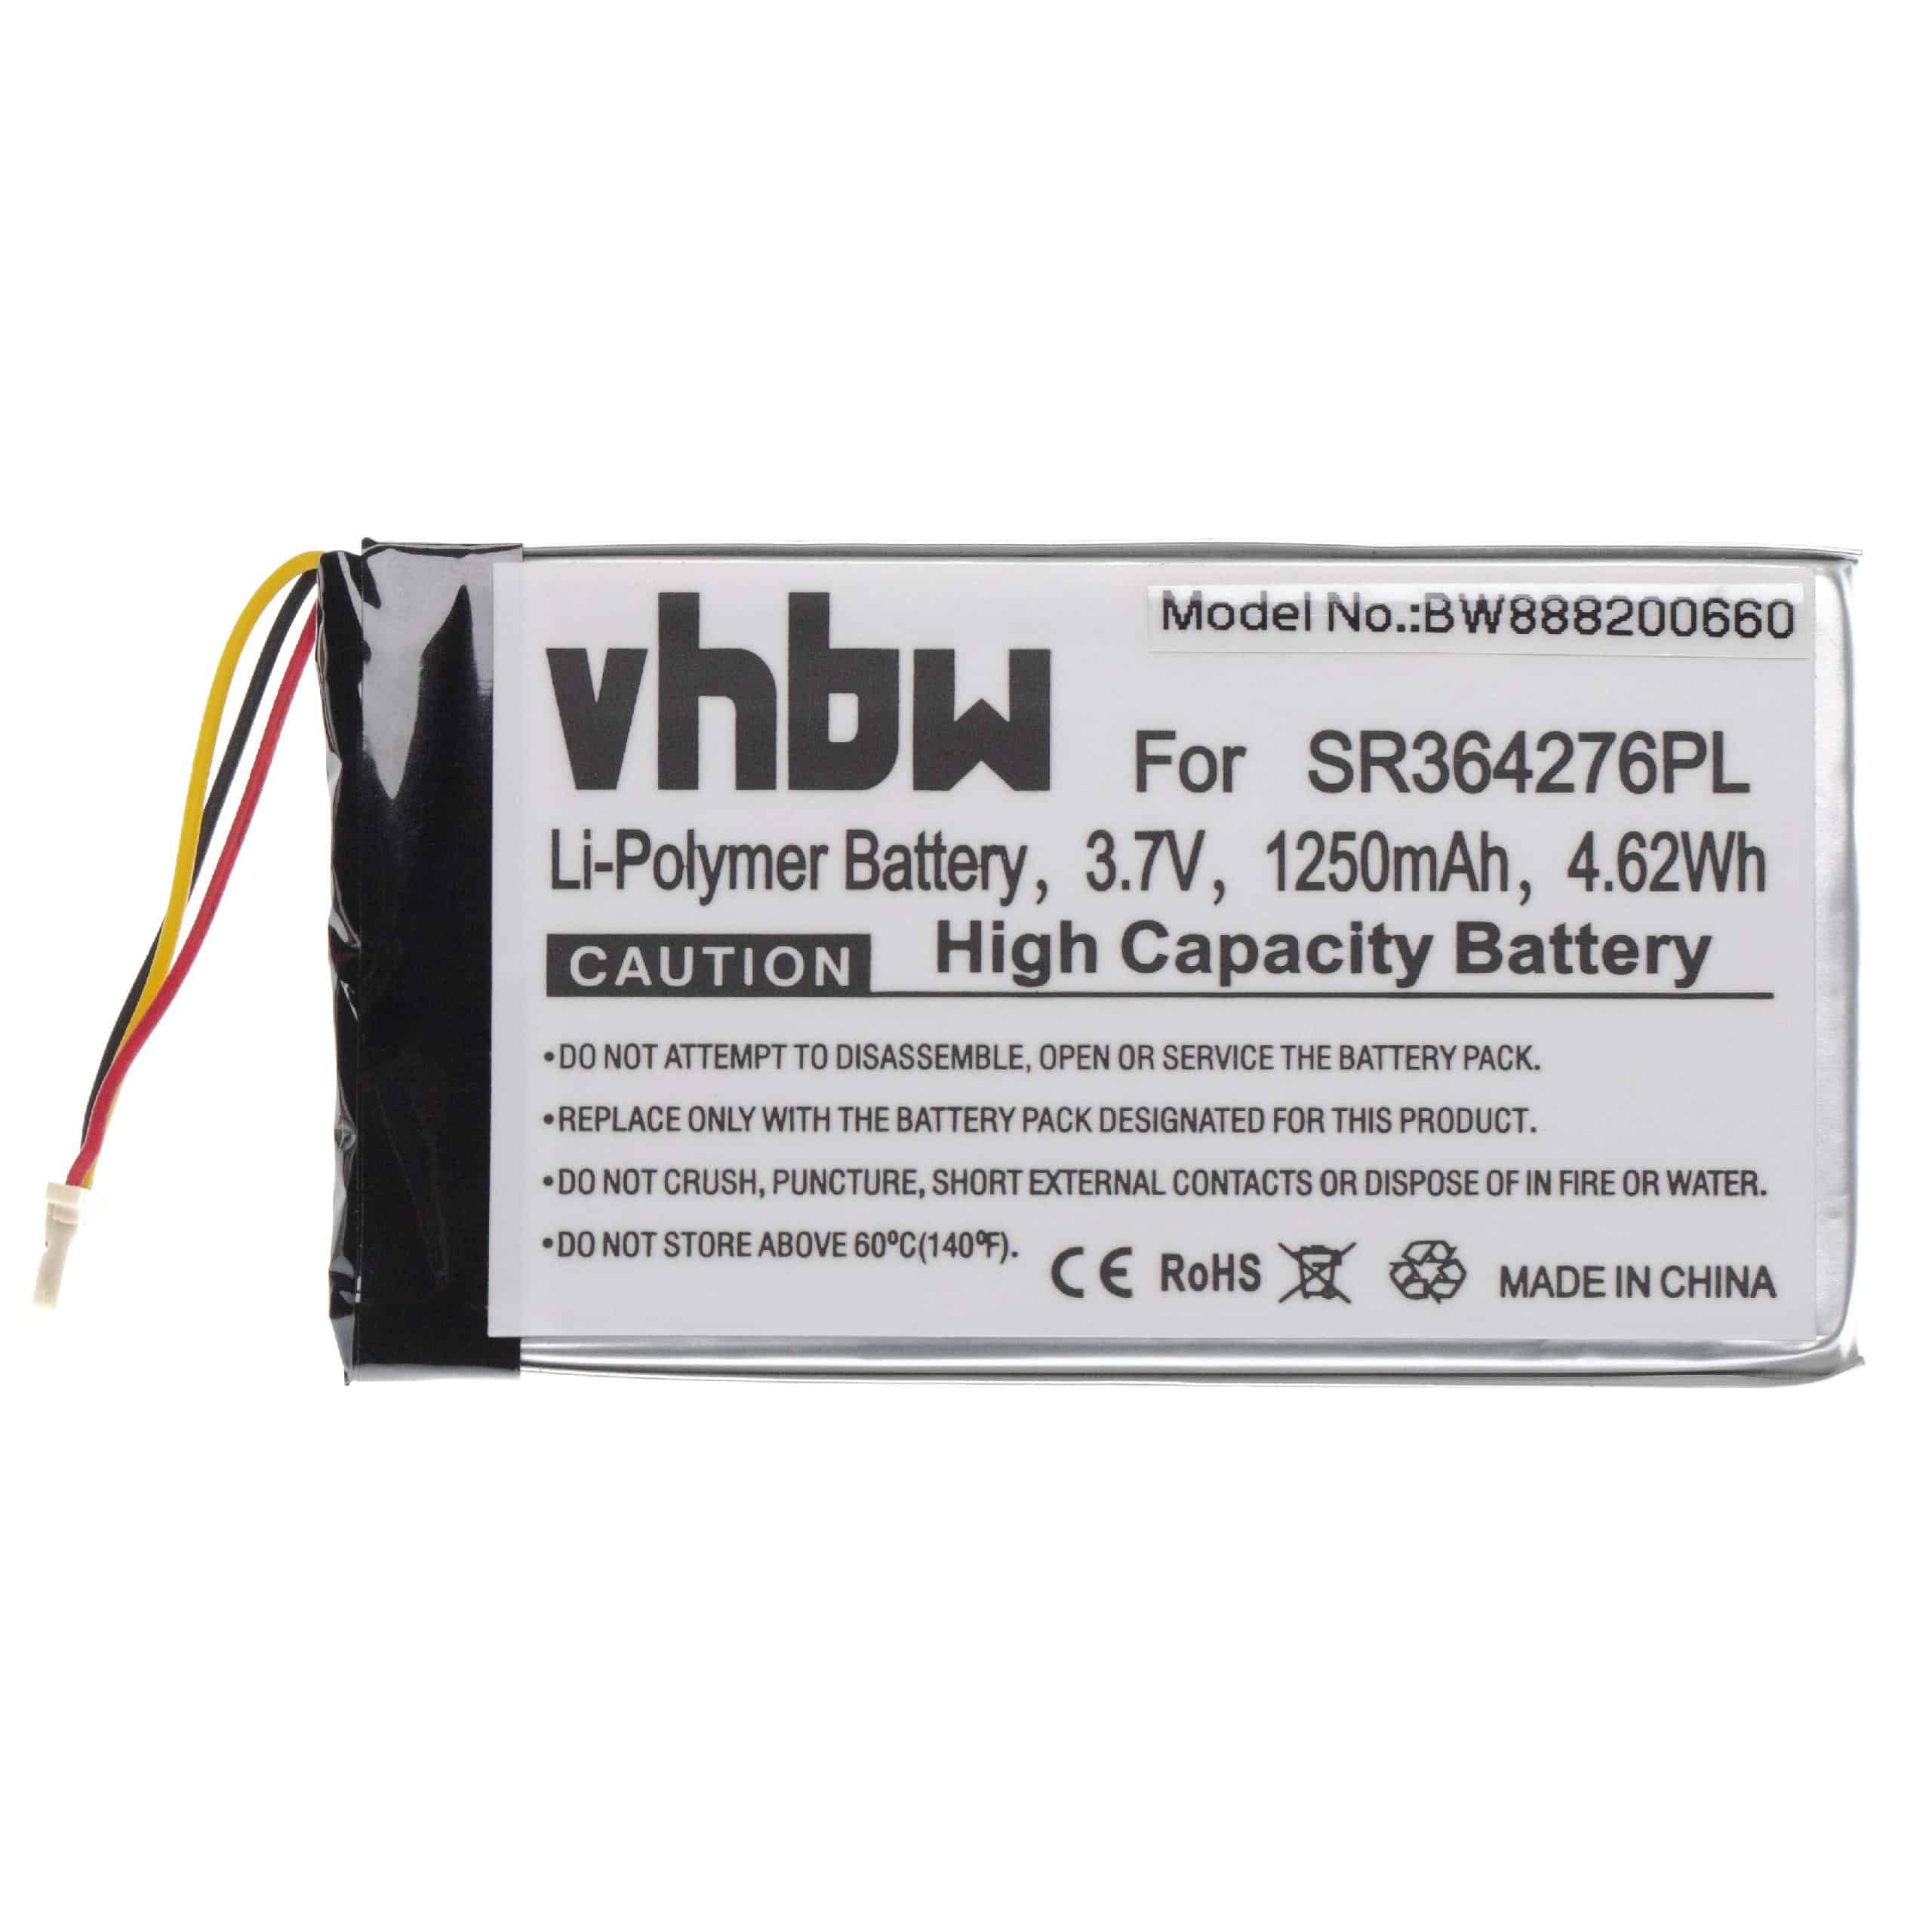 GPS Battery Replacement for Becker SR364276 - 1250mAh, 3.7V